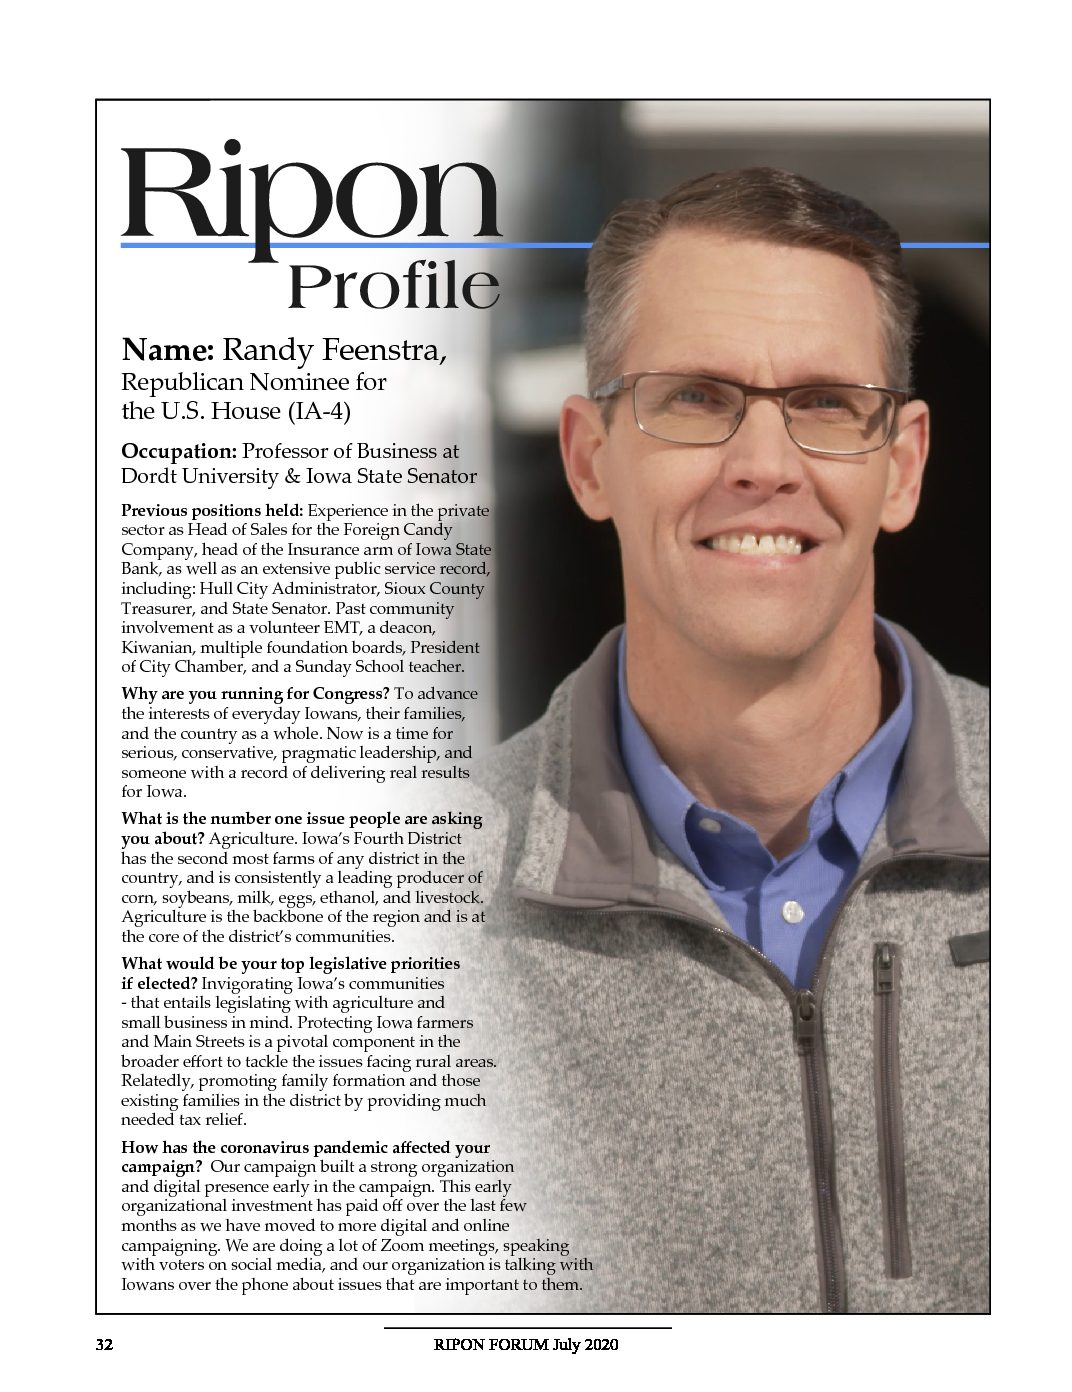 Ripon Profile of Randy Feenstra